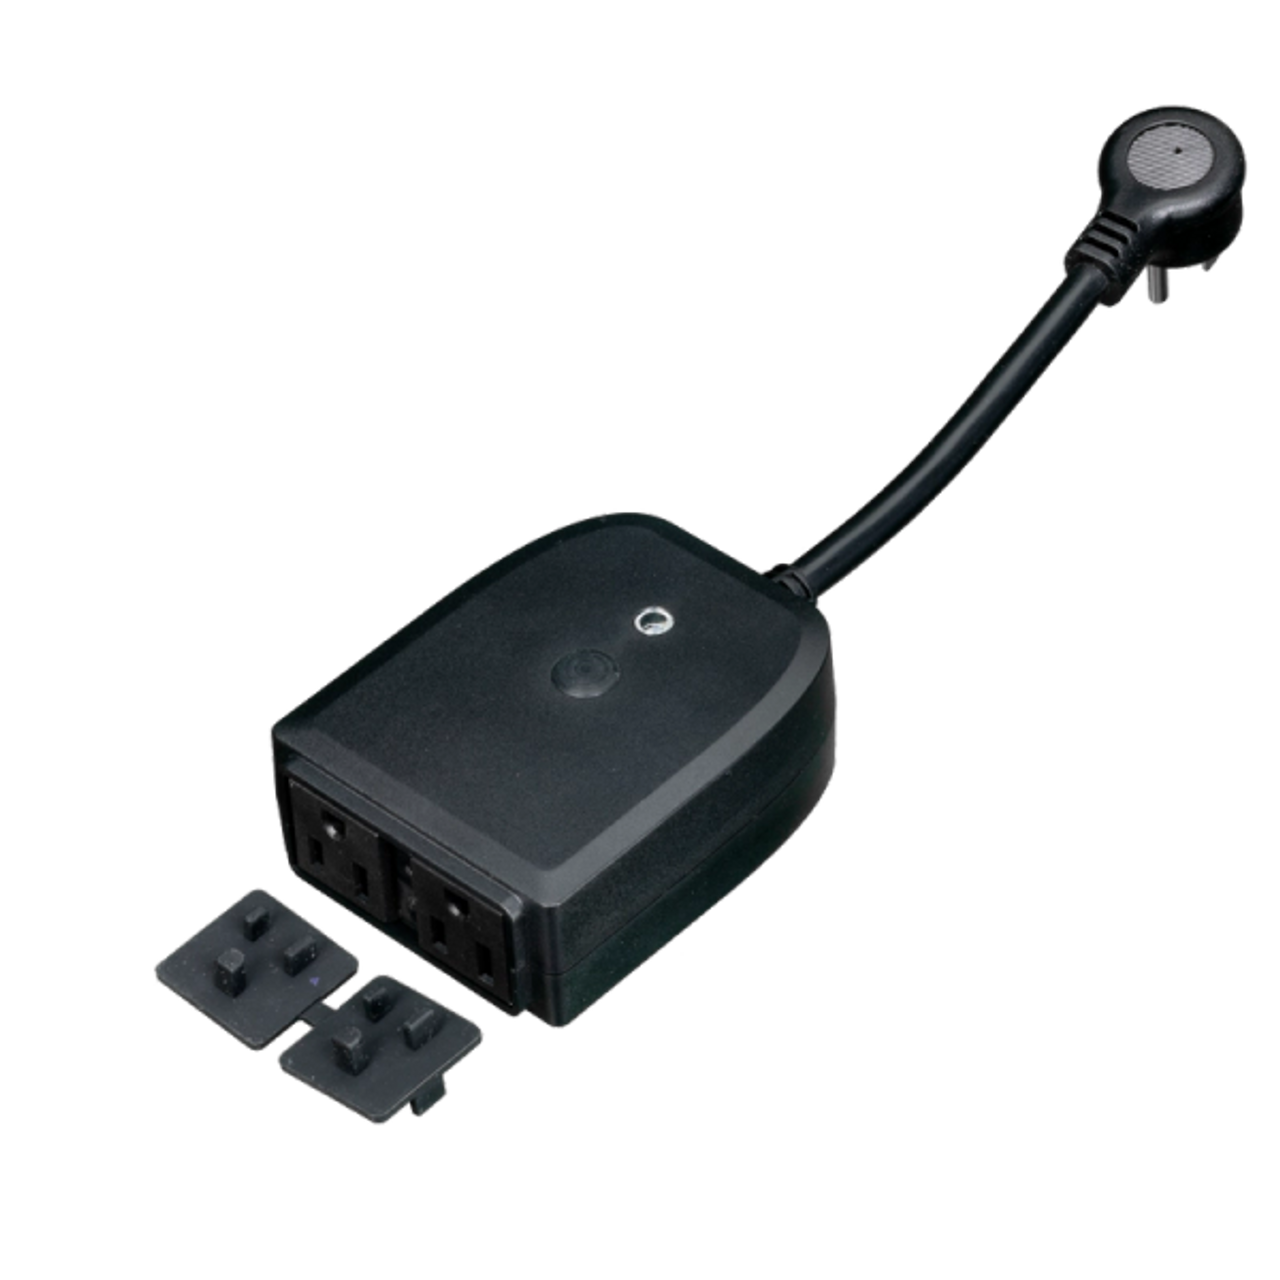 Wireless IP44 Waterproof WiFi Smart Plug Outdoor Remote Control